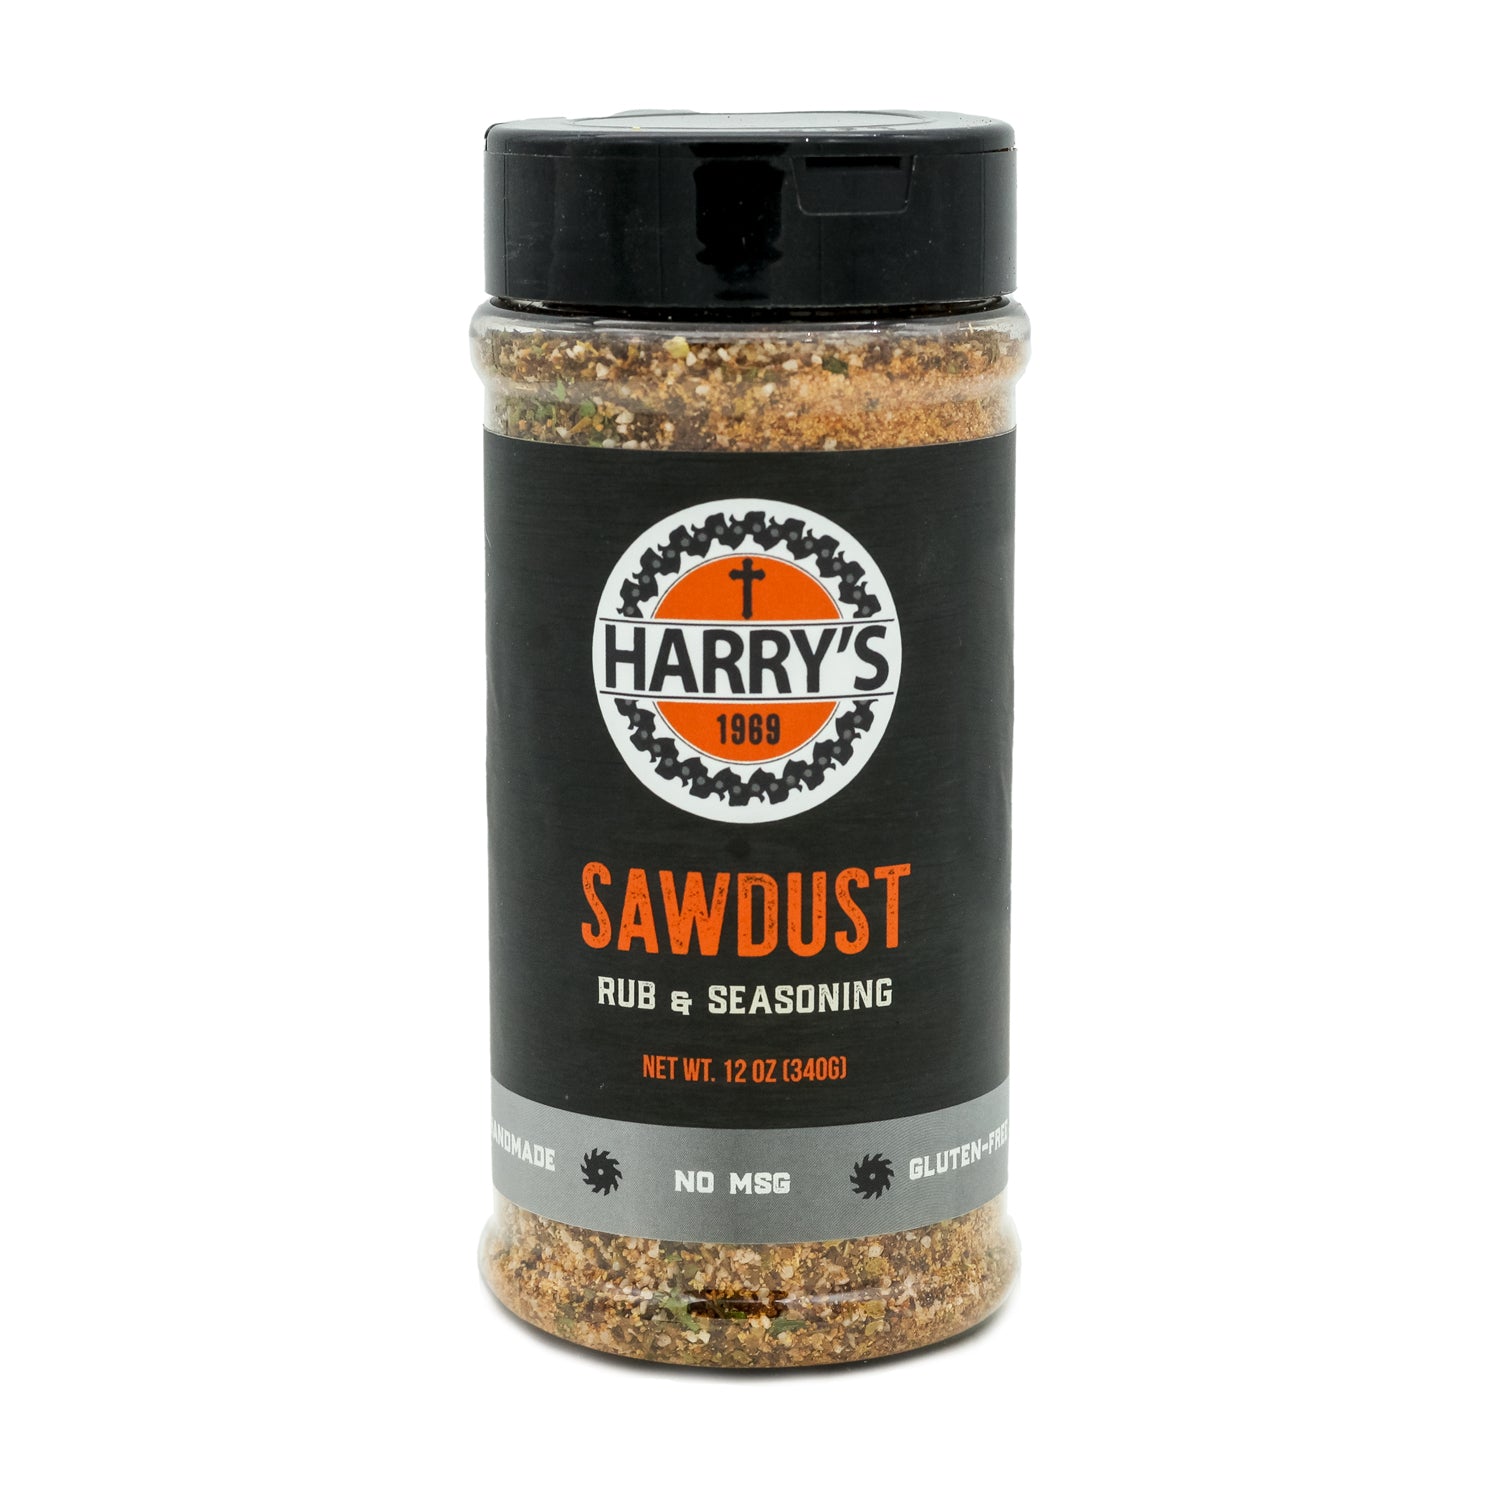 Harry's Sawdust Steak Rub